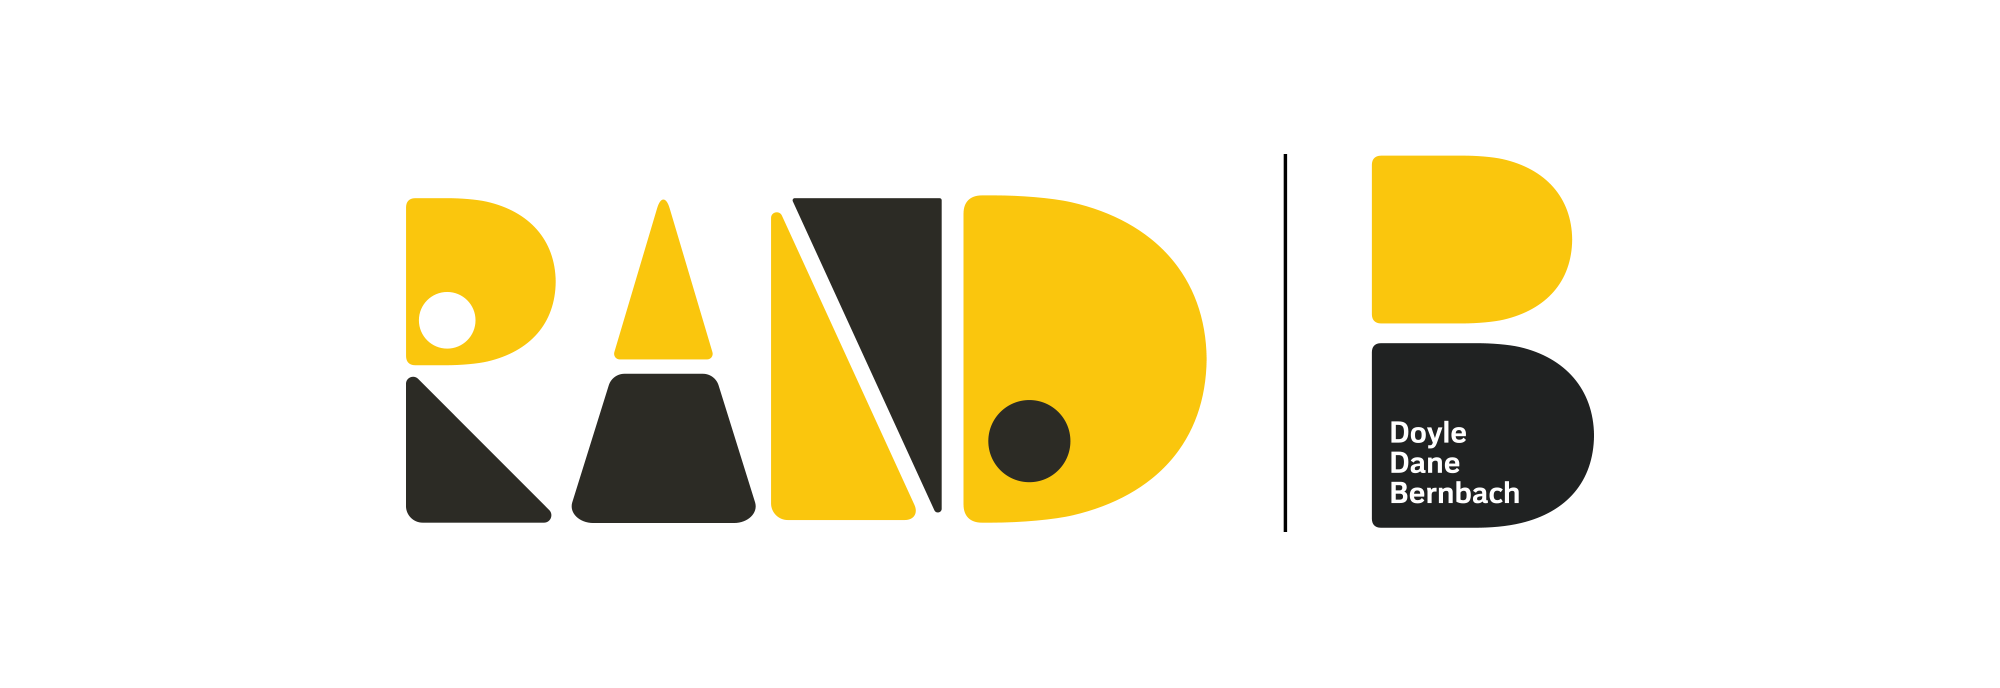 DDB Rand Logo Exploration 03